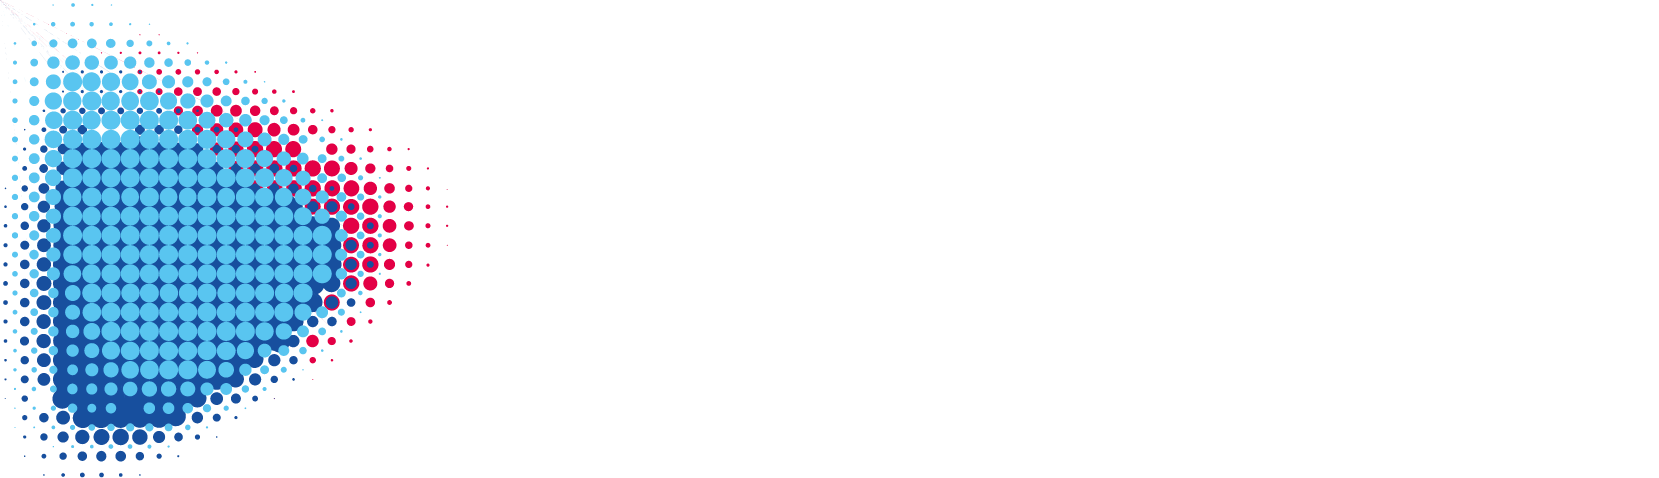 Novatek logo grand pour les fonds sombres (PNG transparent)